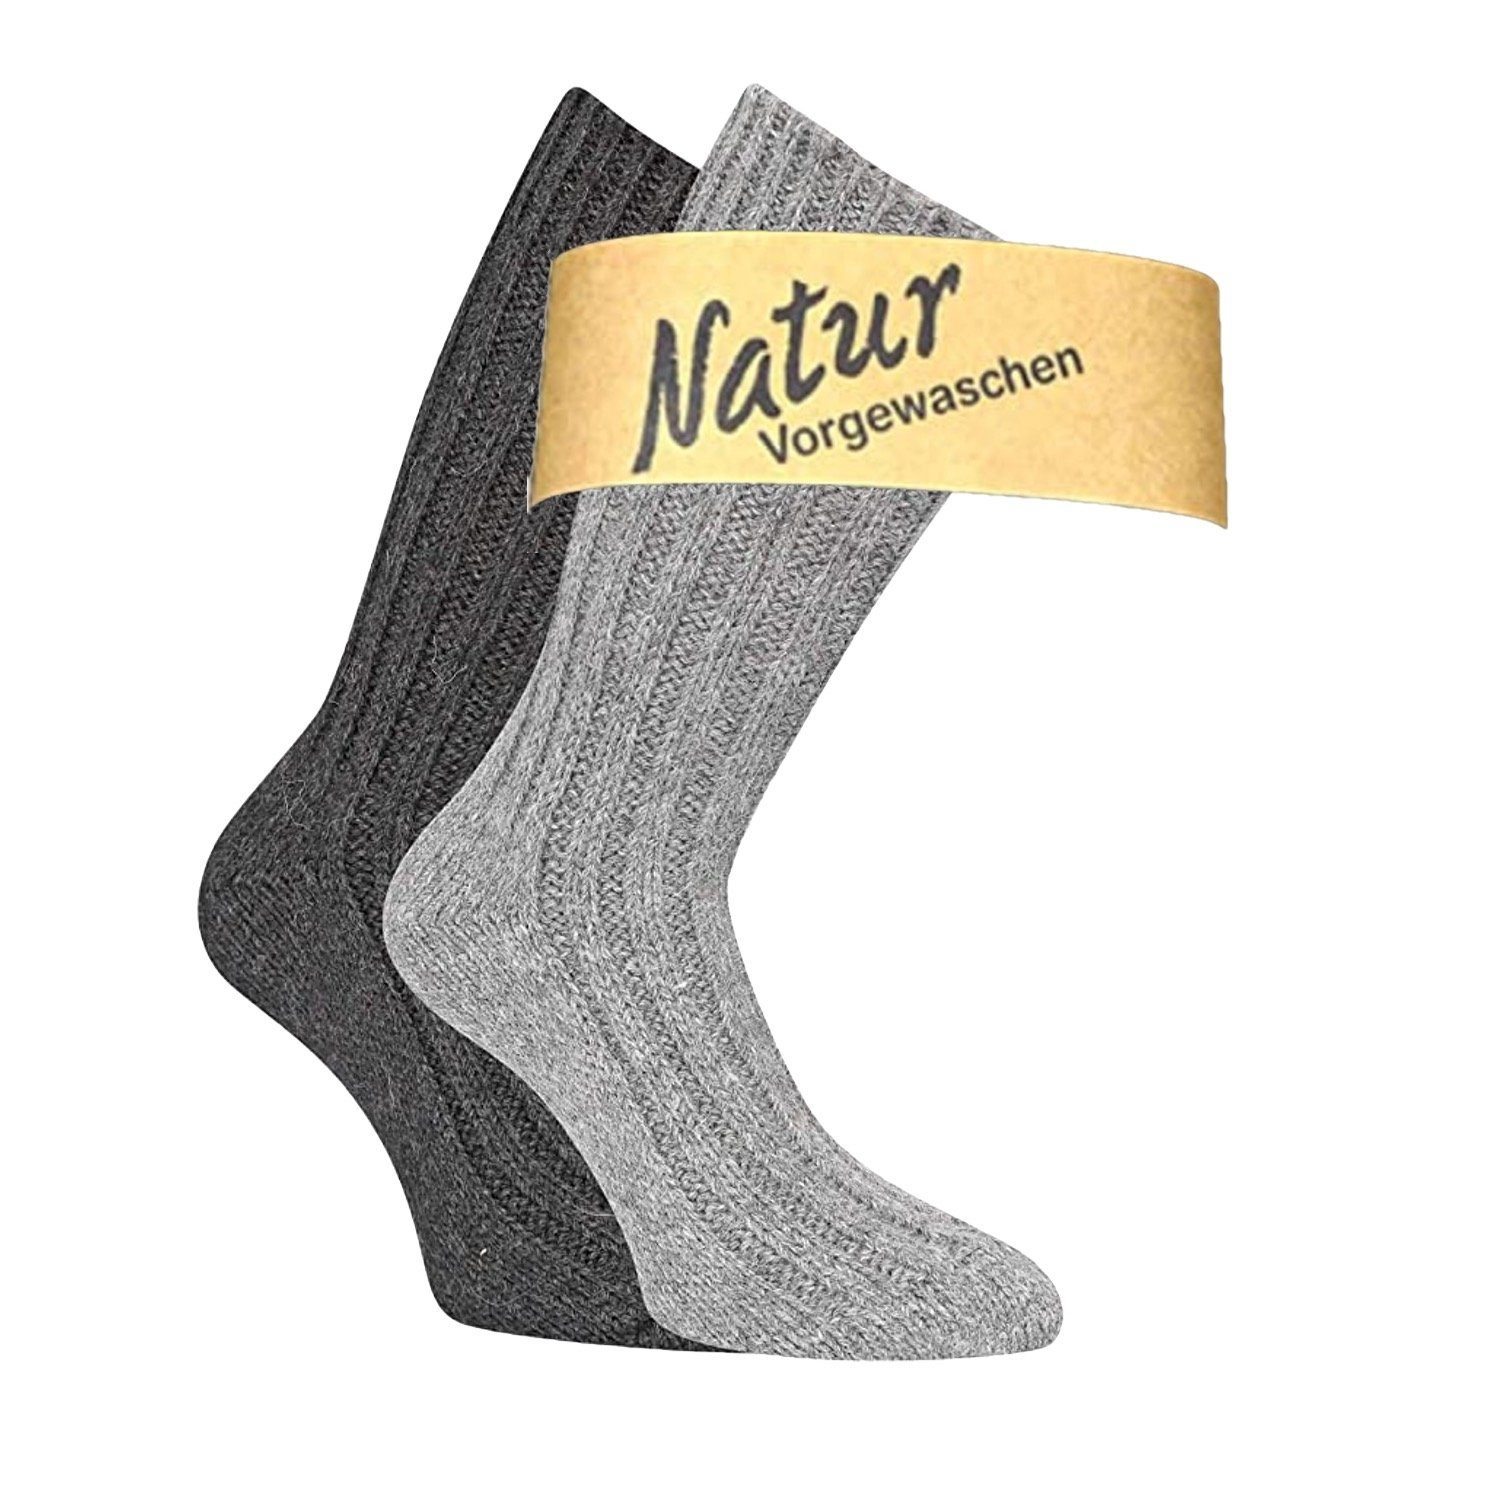 Alpaka Stricksocken selbst underwear Socken (2-Paar) gestrickt grau-schwarz wie Wollsocken Socken Cocain